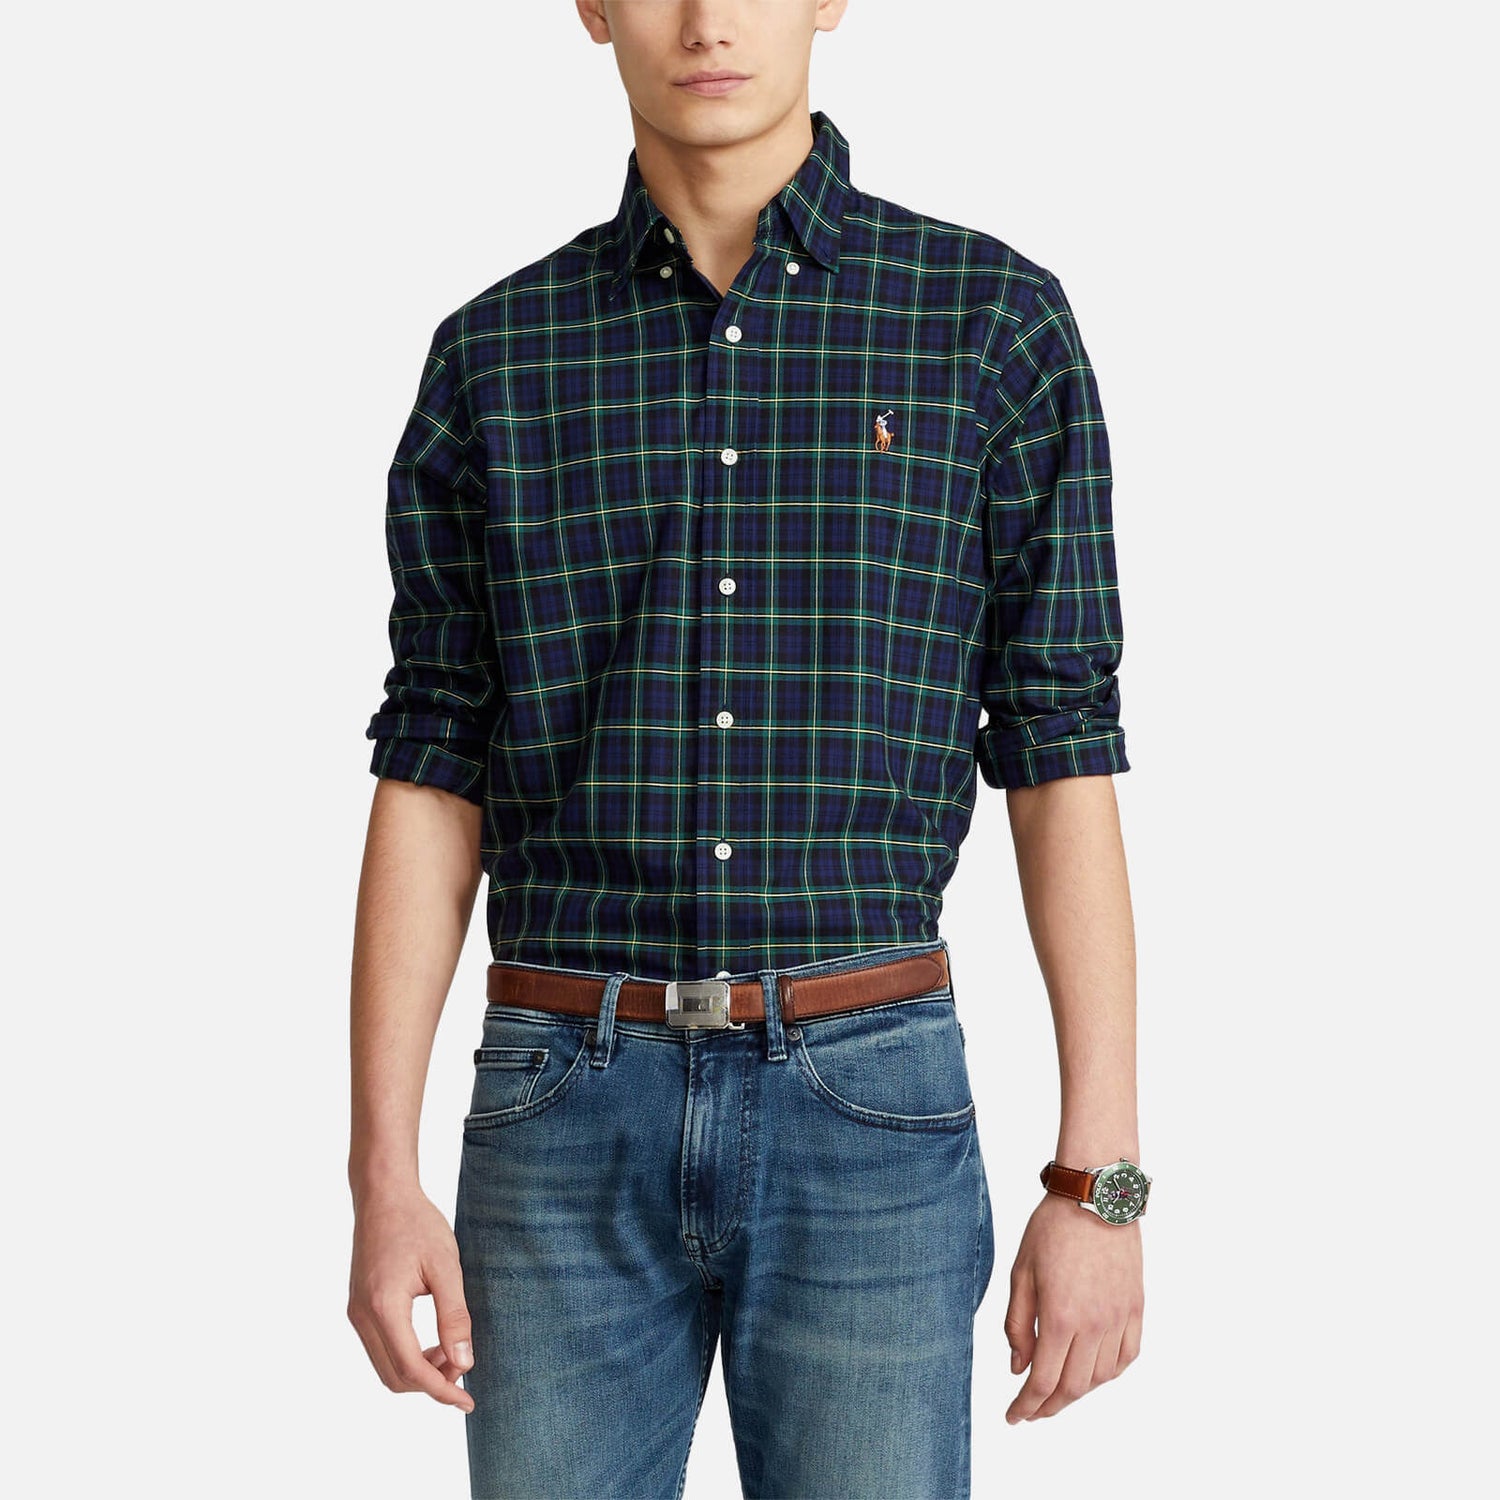 Polo Ralph Lauren Men's Slim Fit Oxford Shirt - Navy/Green - S